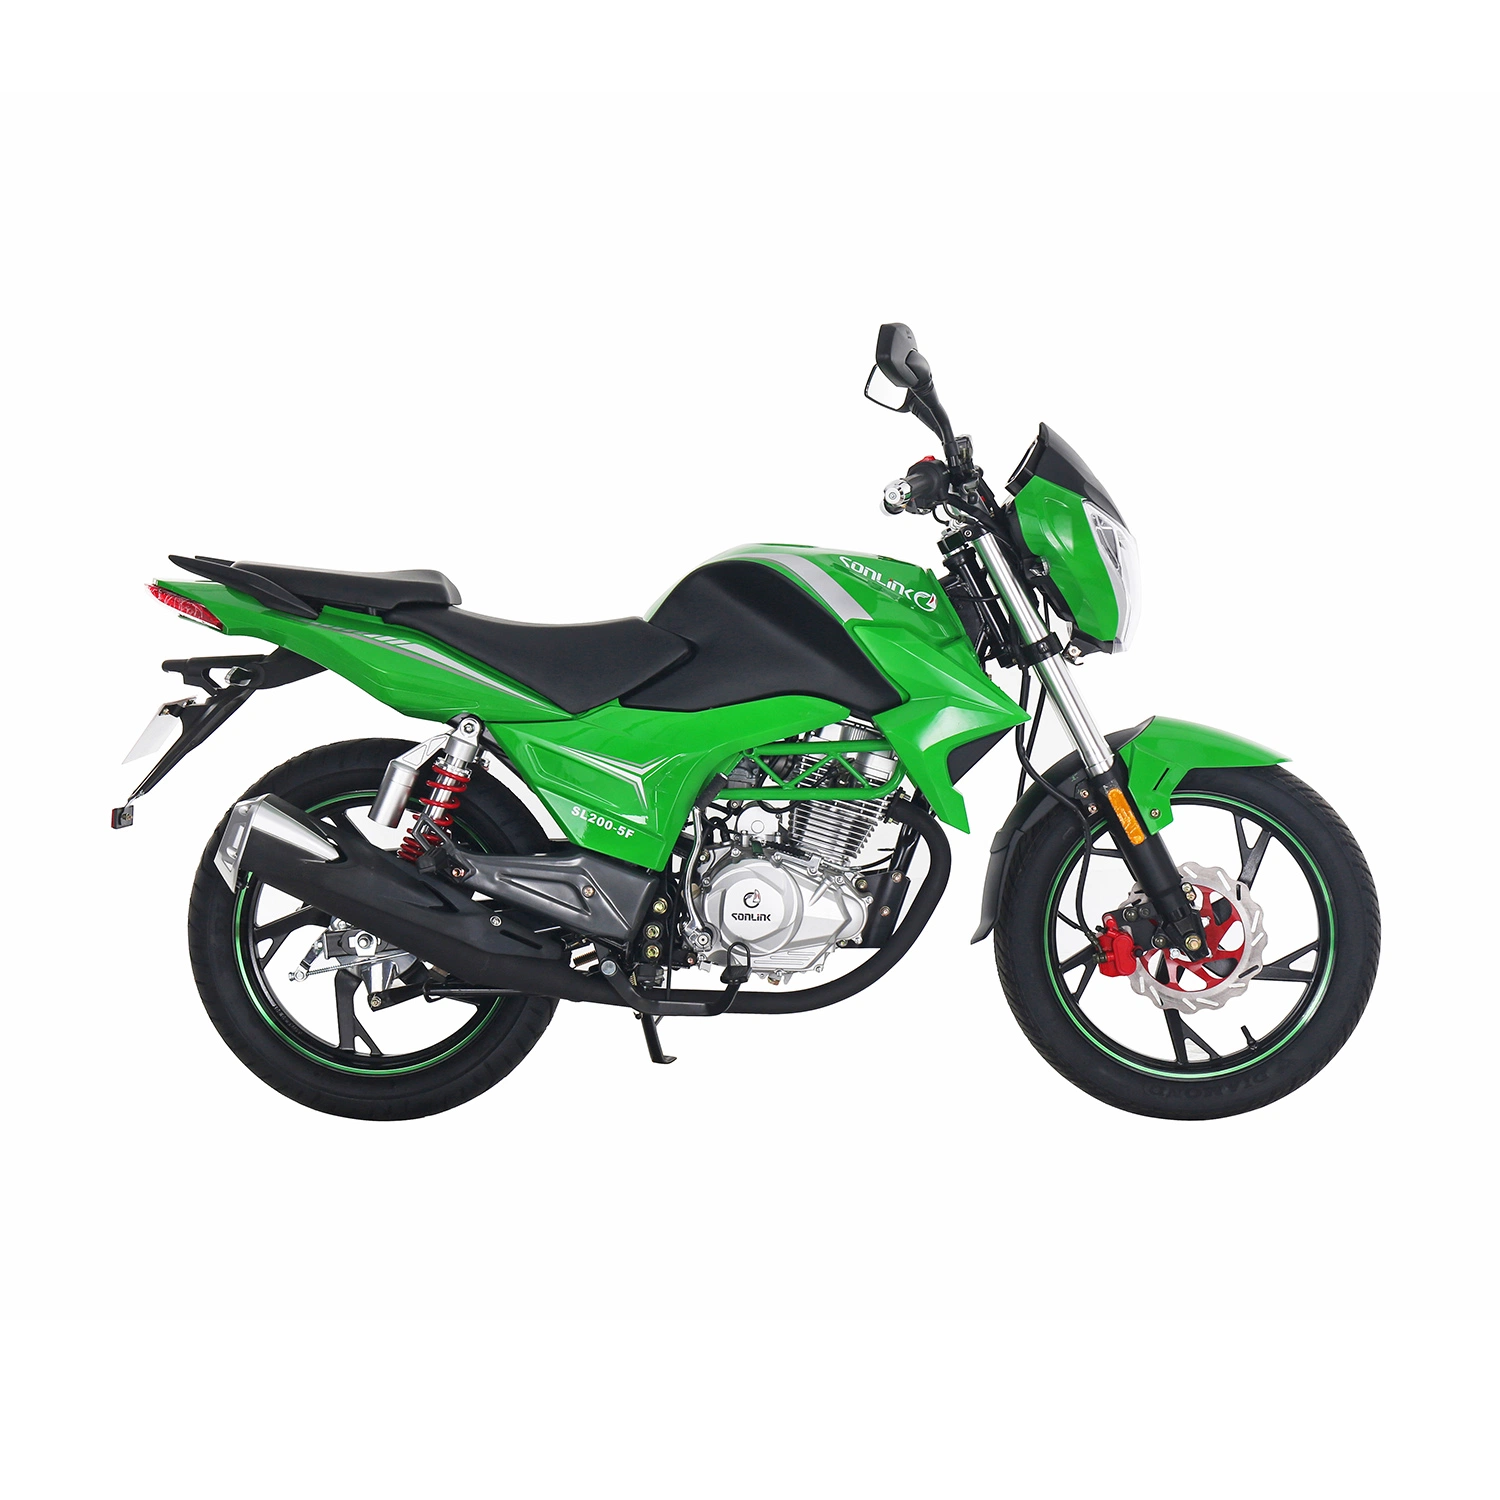 Big Dirt Bike 200cc / 250 Cc Motorcycle / 125 Cc Motorbike / 150 Cc Motorcycle / 200cc Motorcycle / Moto / 49cc Dirt Bike / 50cc Motor Scooter